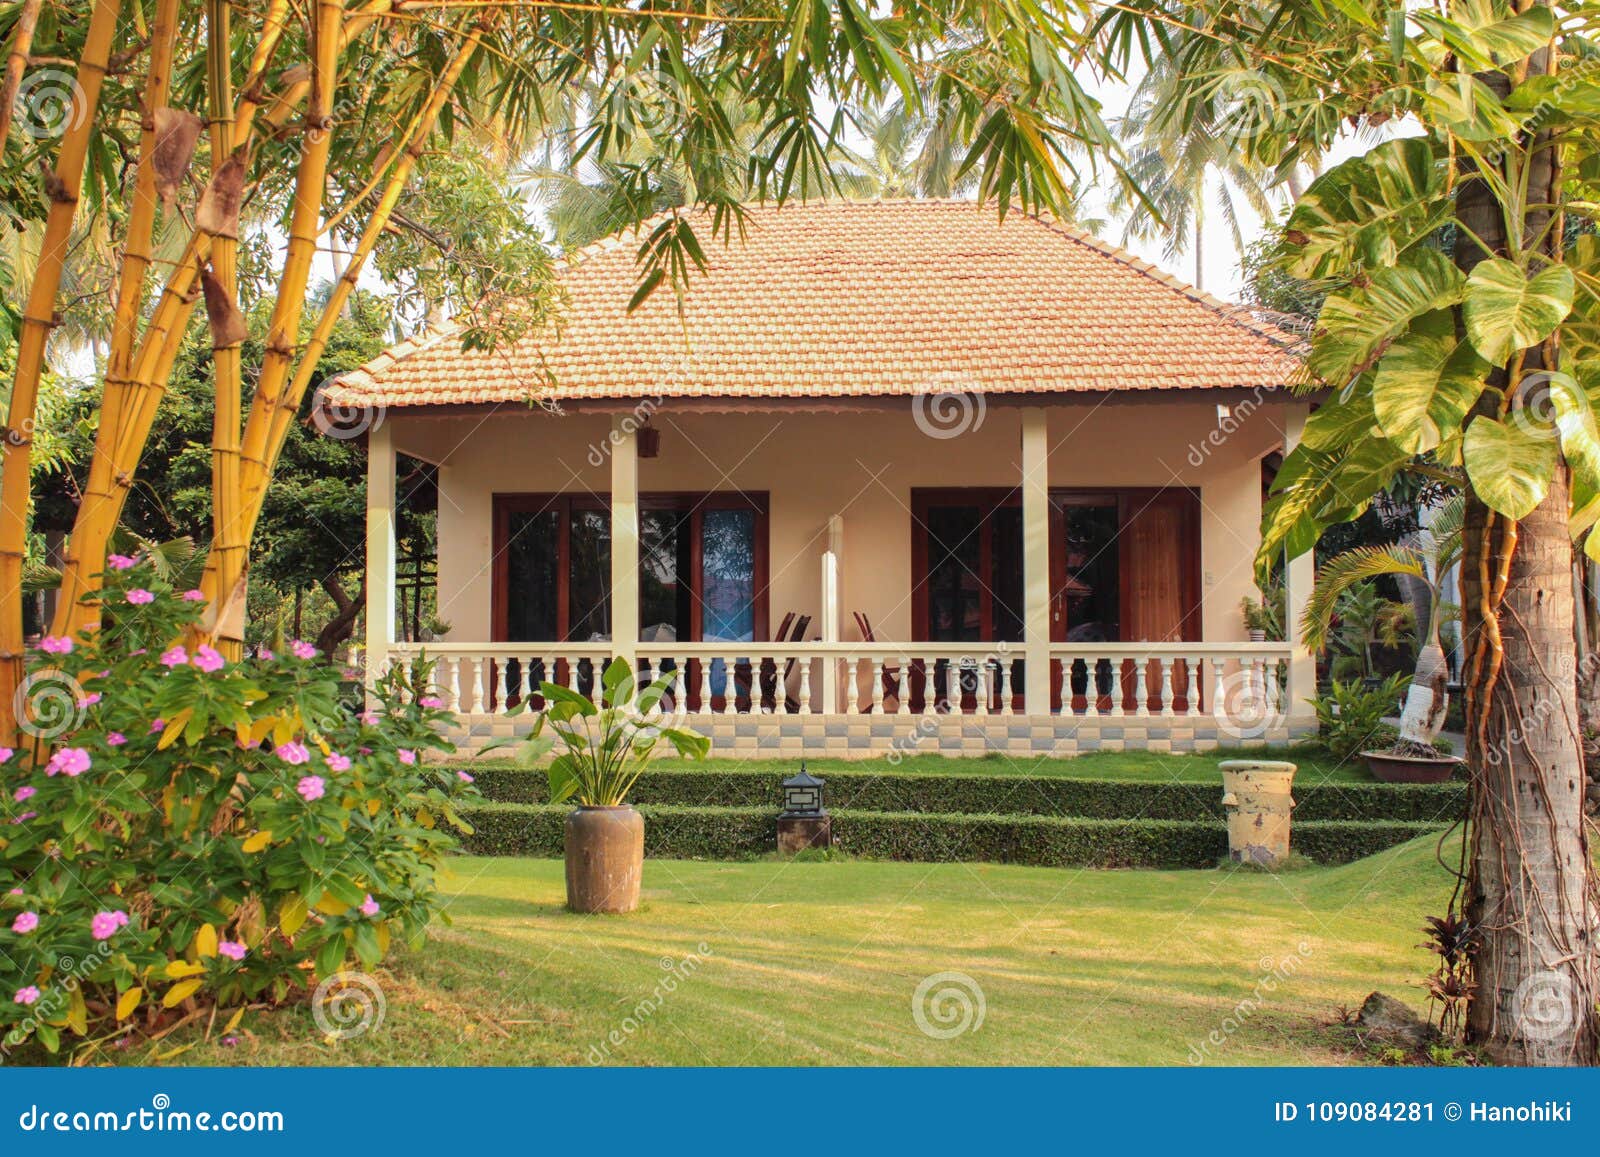 Bungalow And Garden Apartment House In Tropical Garden Stock